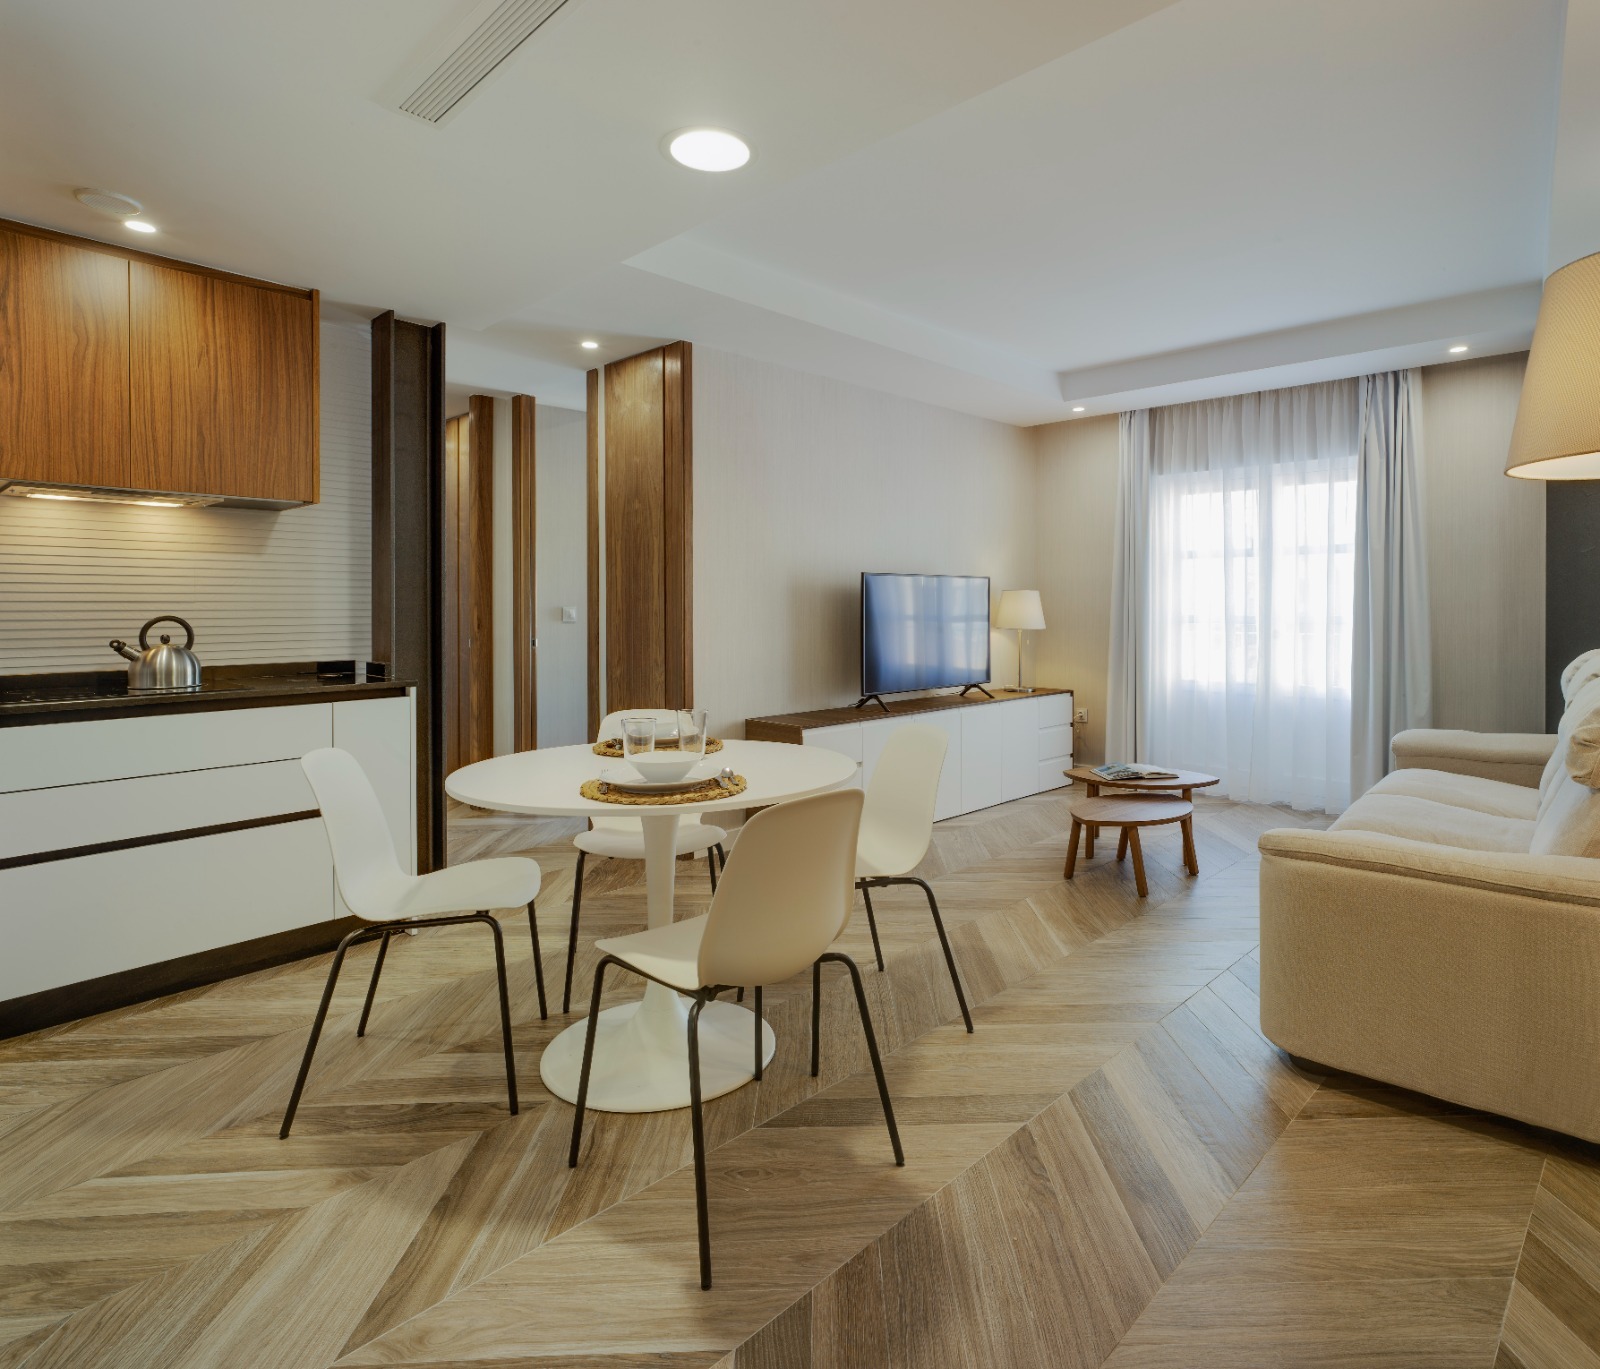 Sebastian 3 - Luxury accommodation for rent in Cartagena